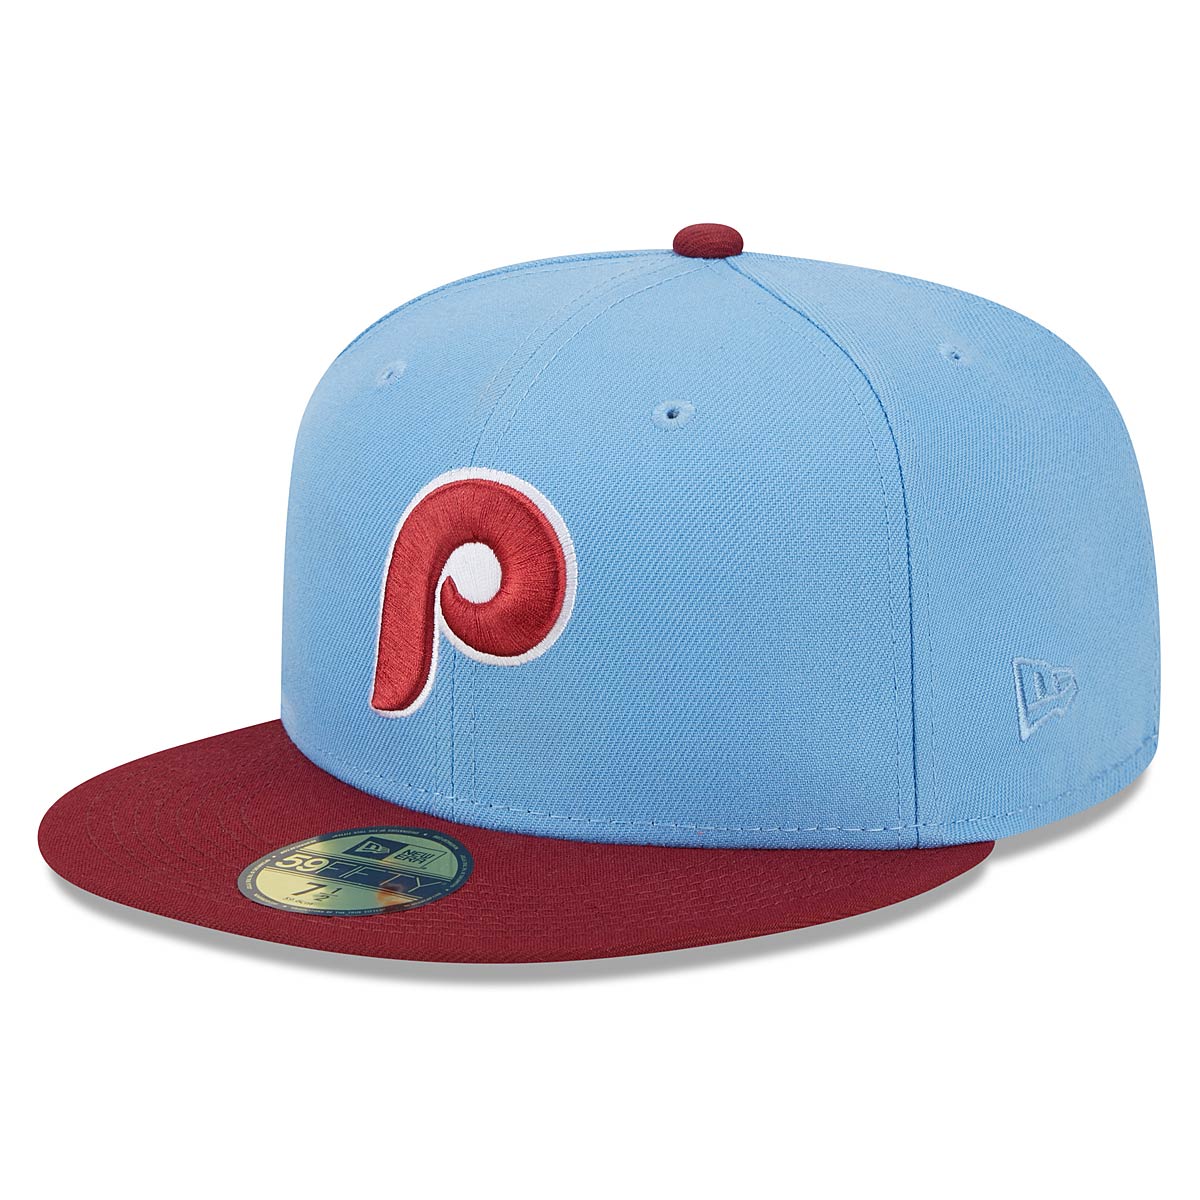 1980 Philadelphia Phillies World Series New Era MLB Fitted Hat